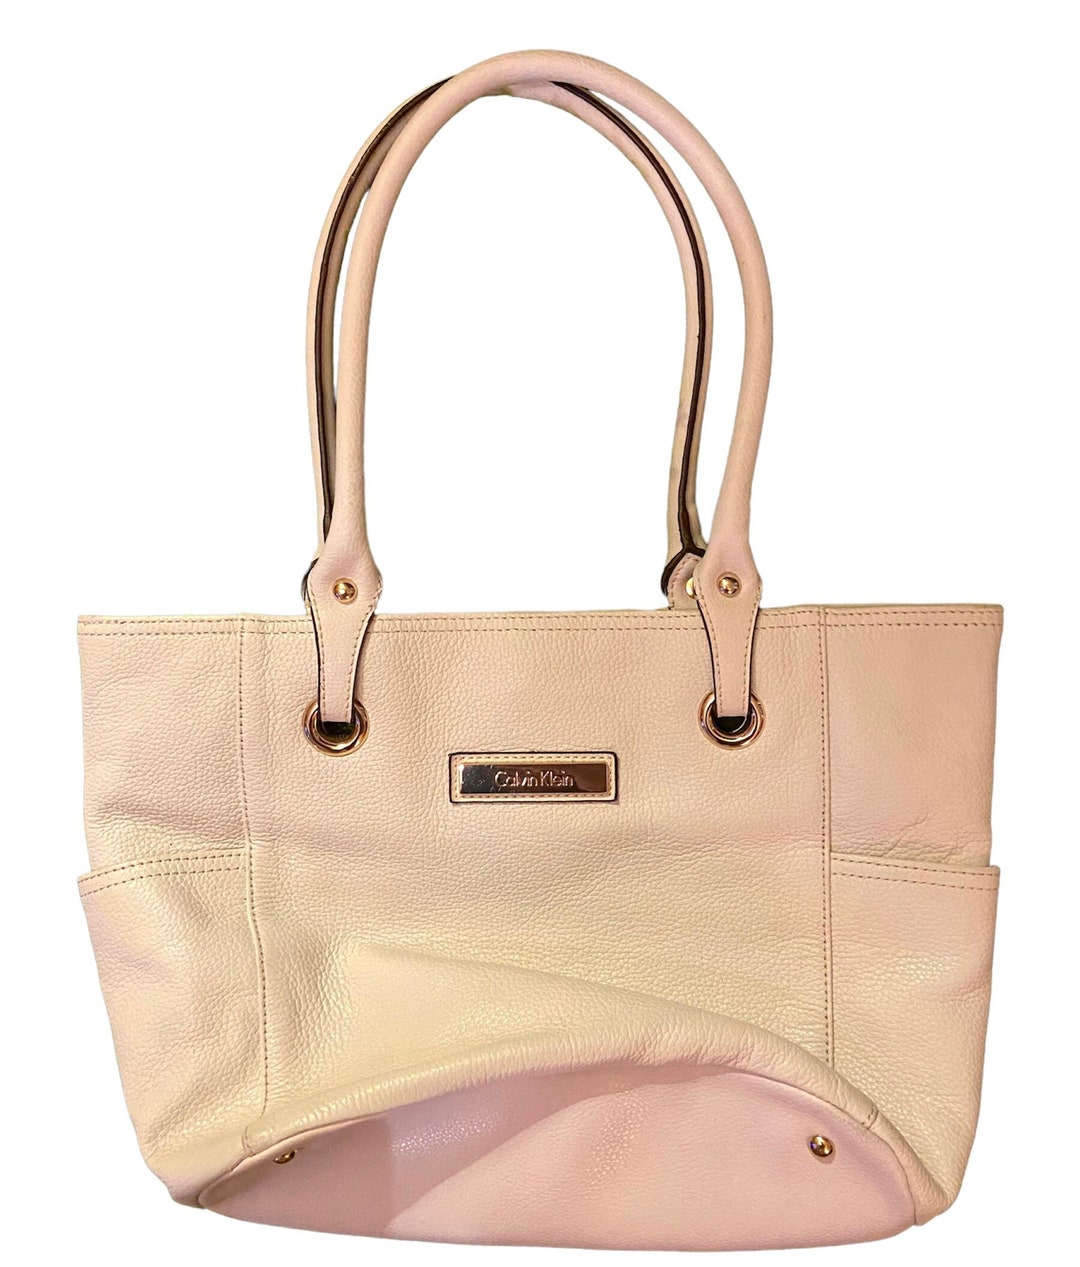 Buy LaFille Women's Handbag | Ladies Purse | Tote bag online